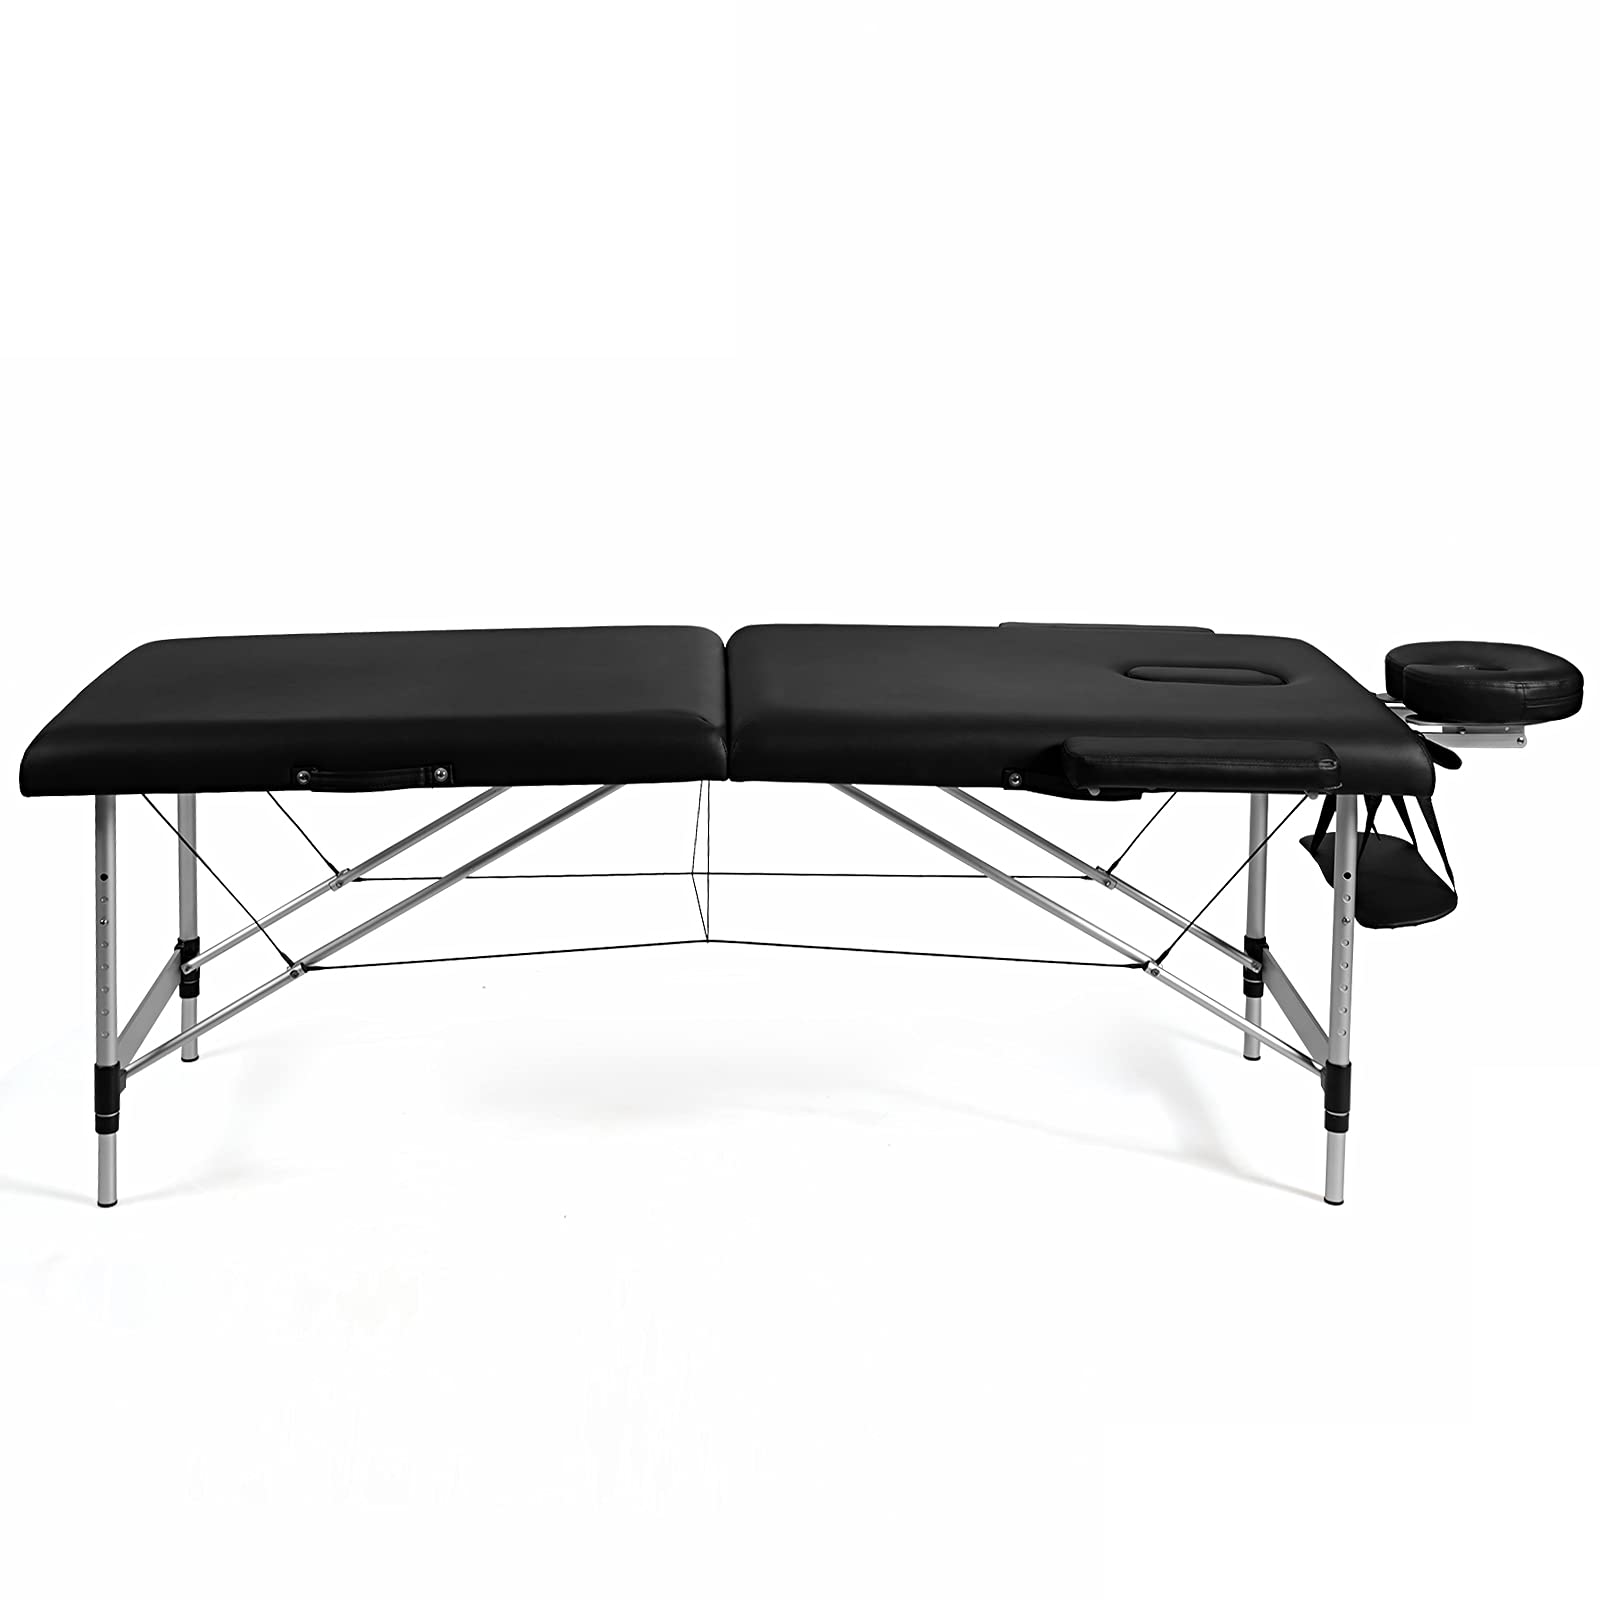 Giantex 84" Massage Table Professional Portable Massage Bed